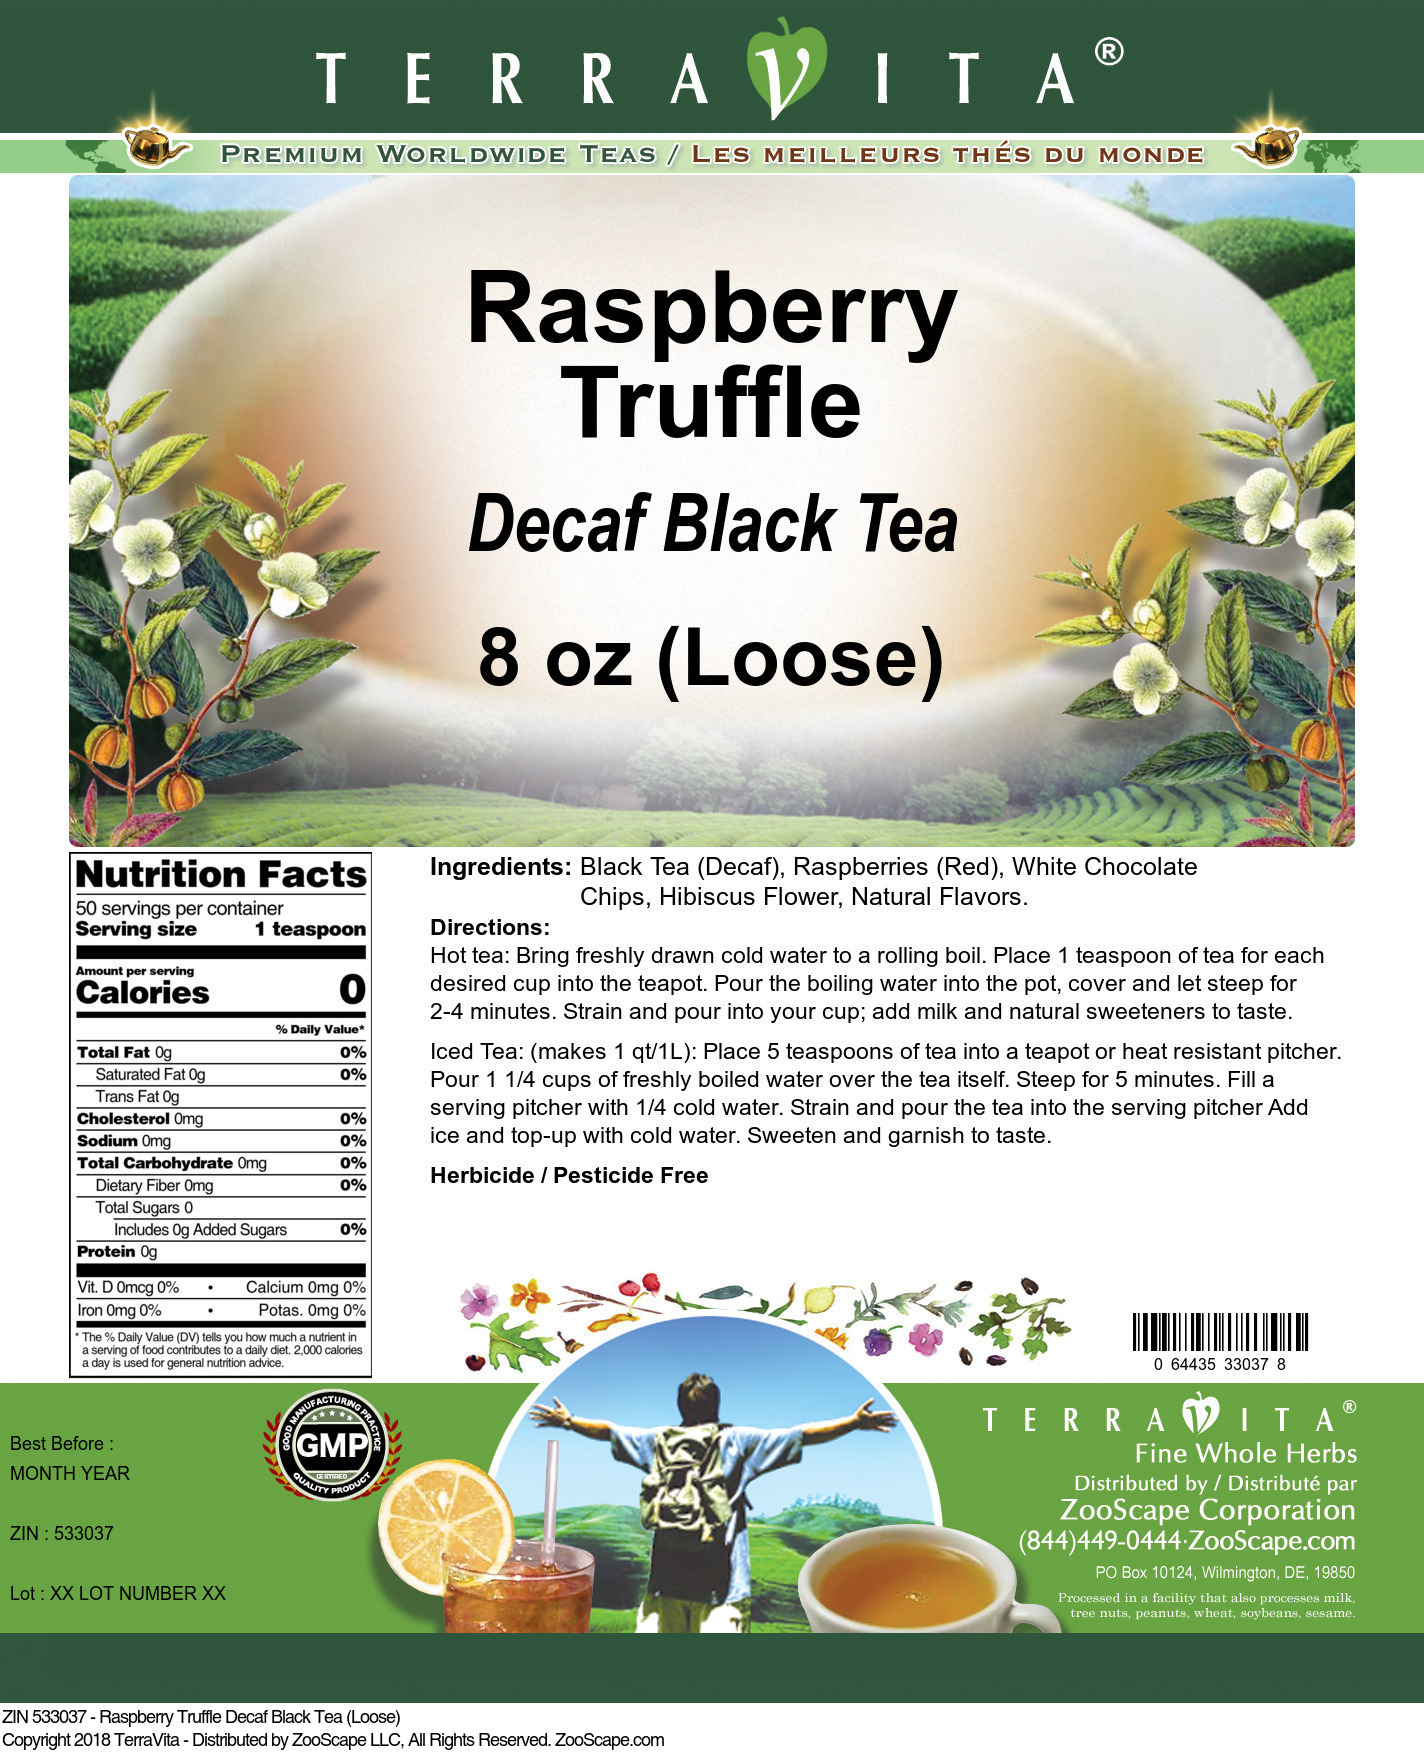 Raspberry Truffle Decaf Black Tea (Loose) - Label